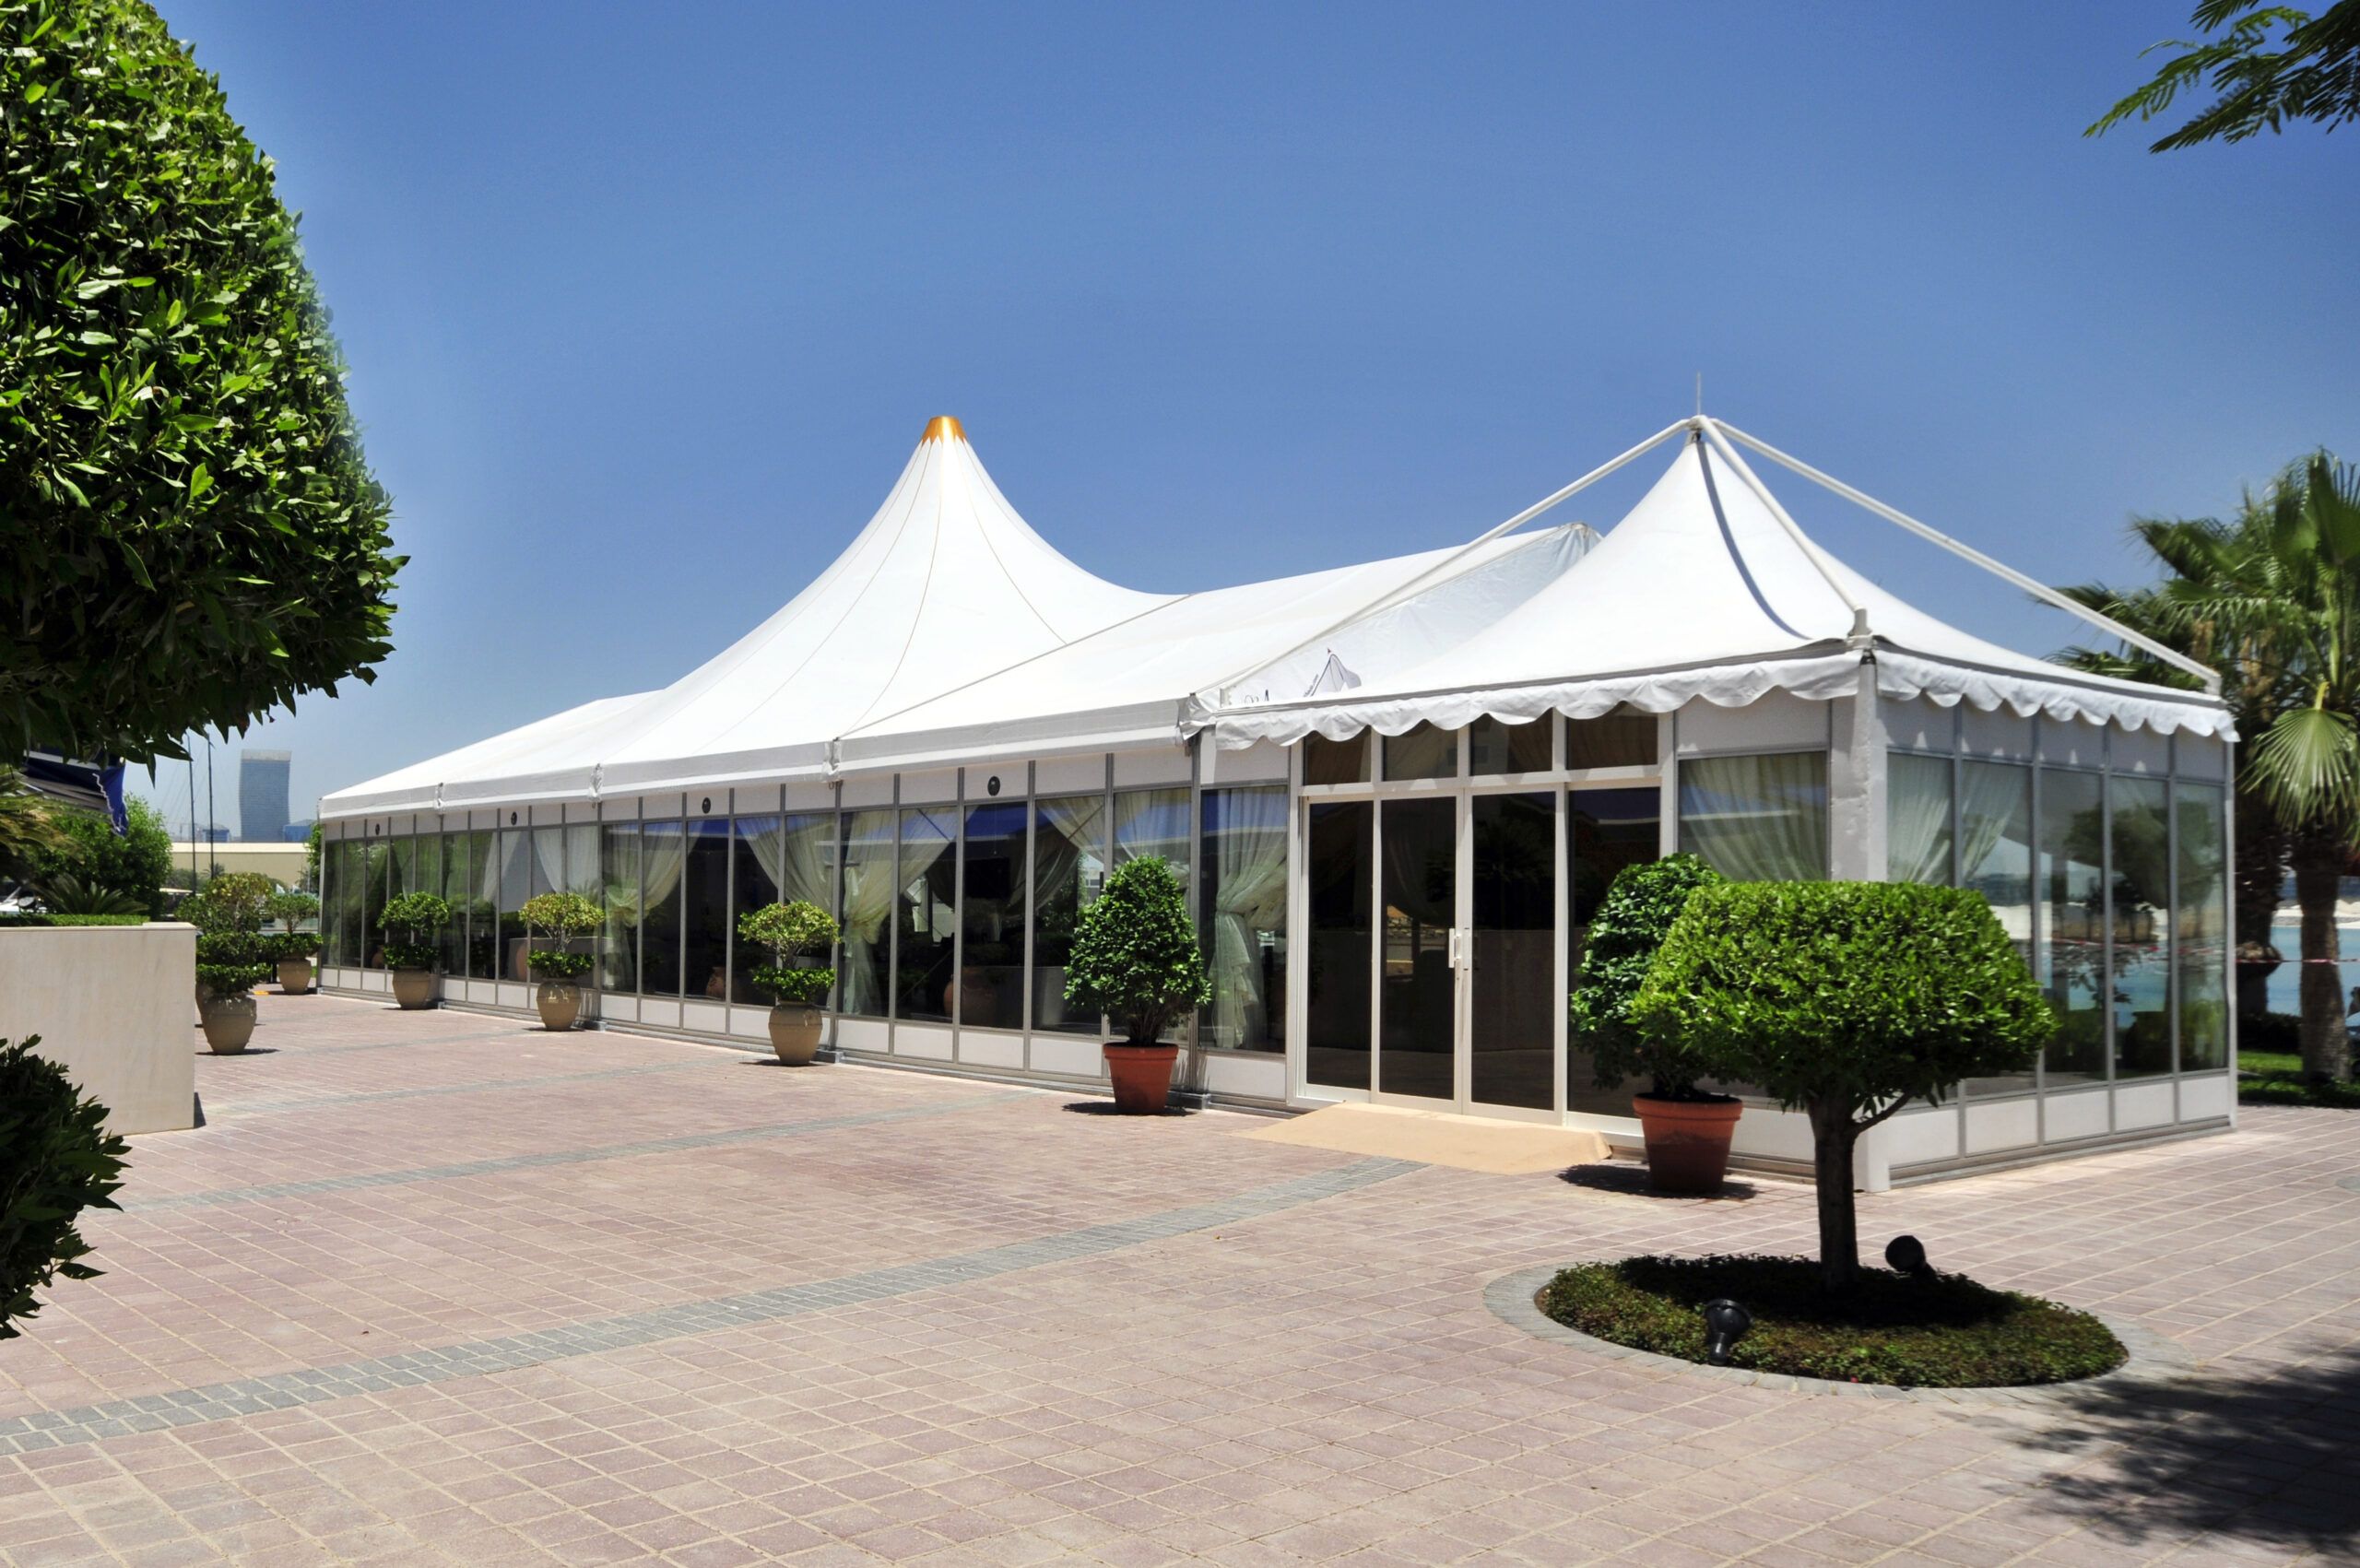 Ramadan Tent Rental Supplier UAE - 055 8850530